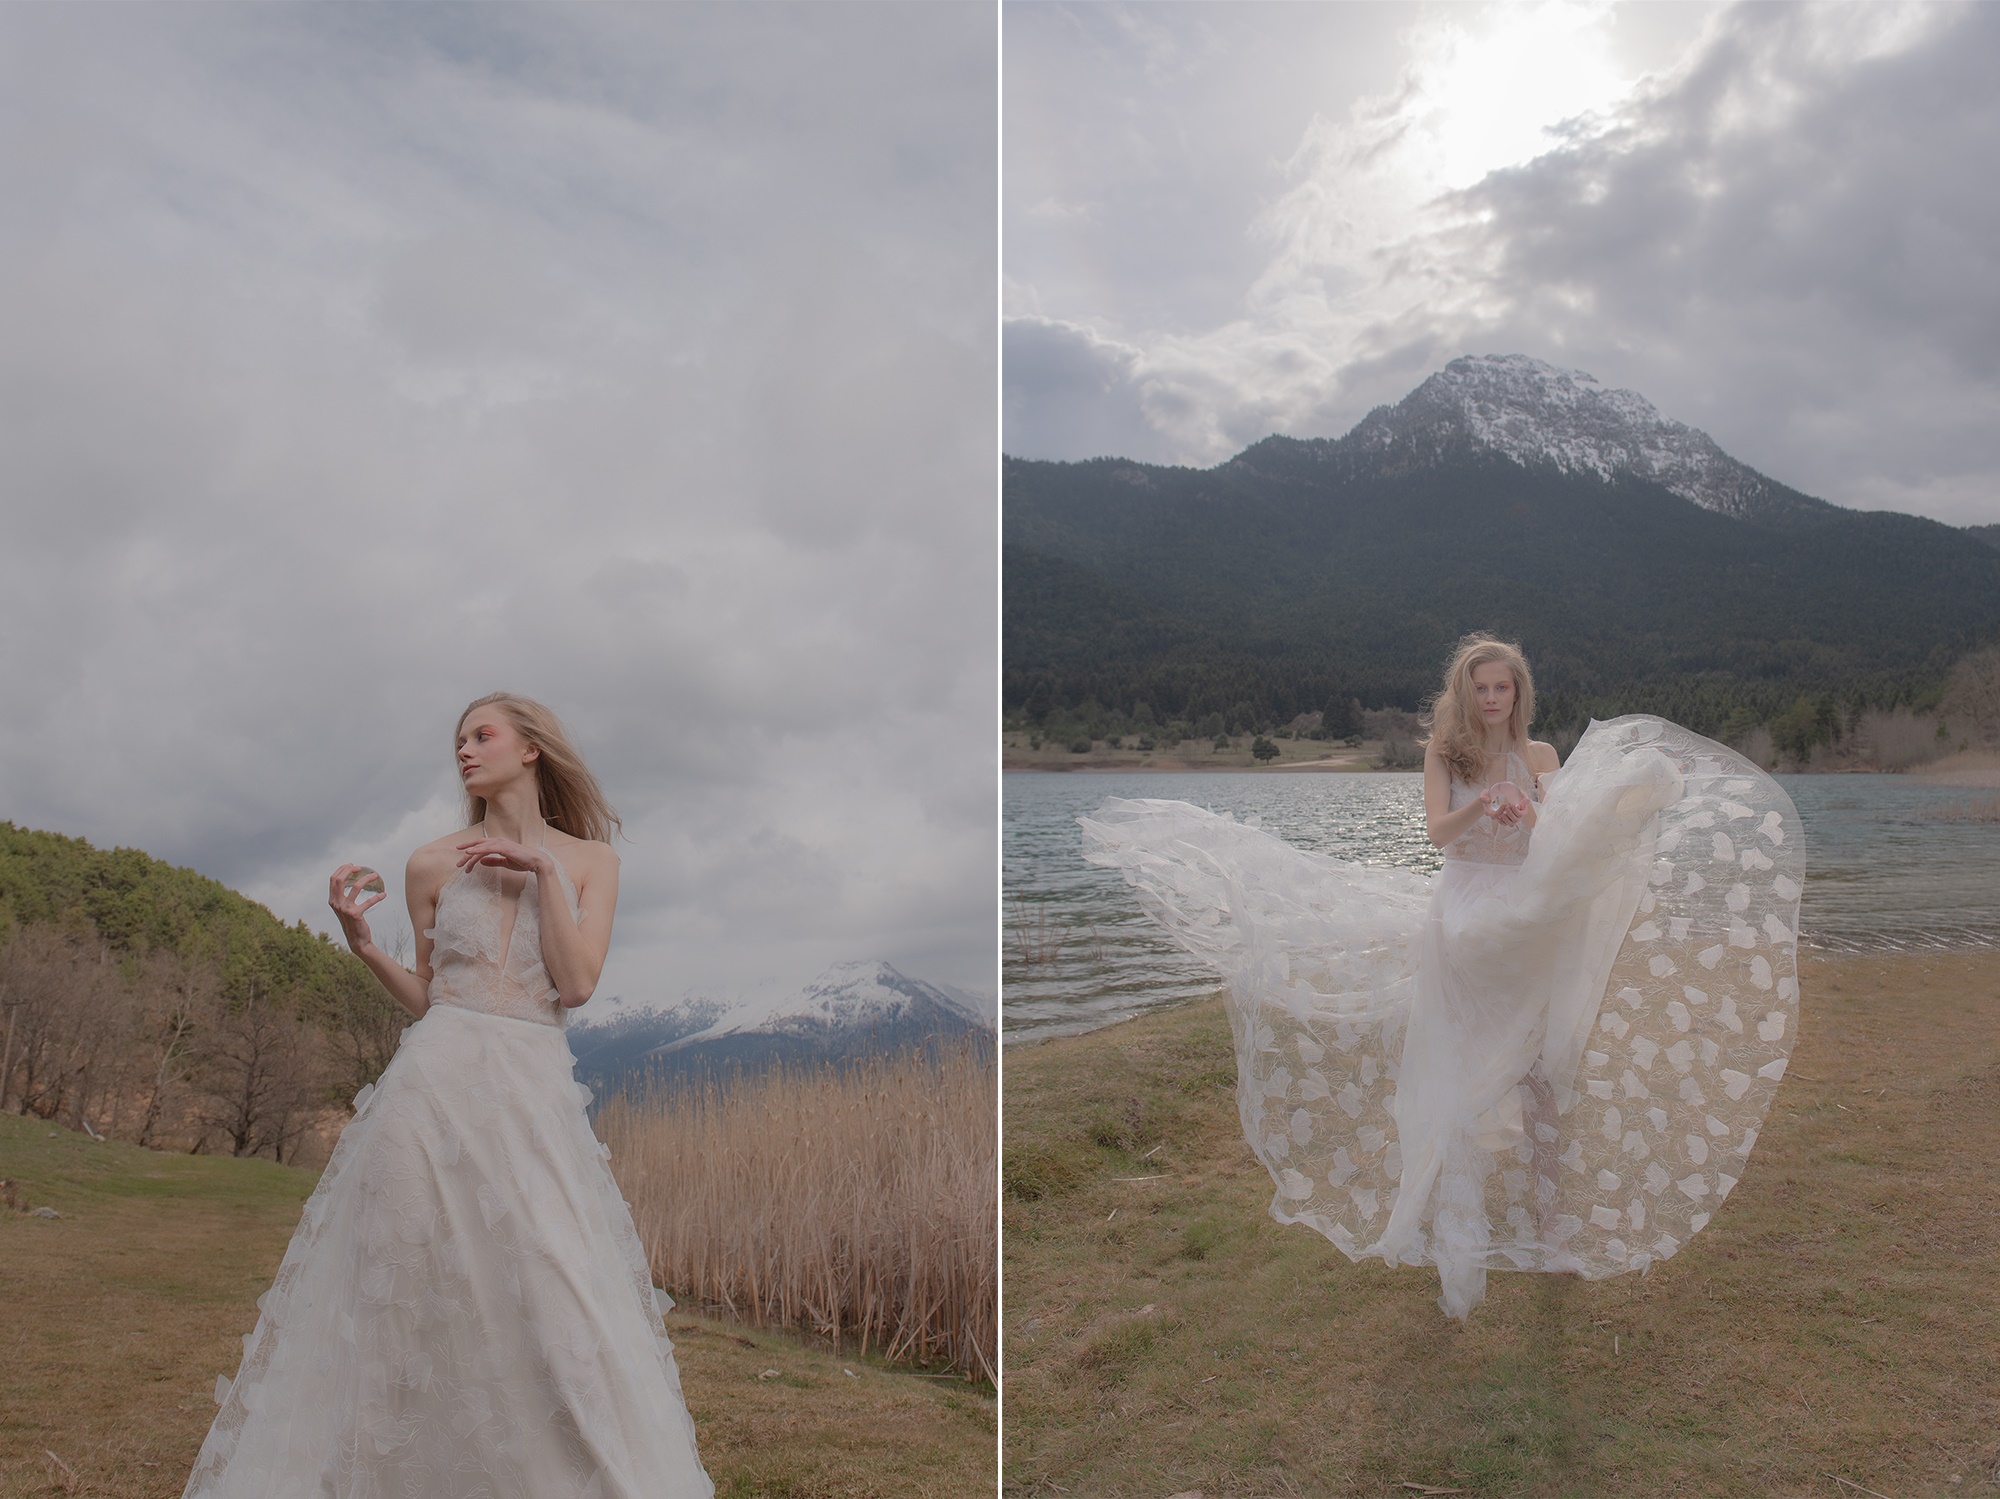 Ethereal boho wedding dresses by Alexia Kirmitsi